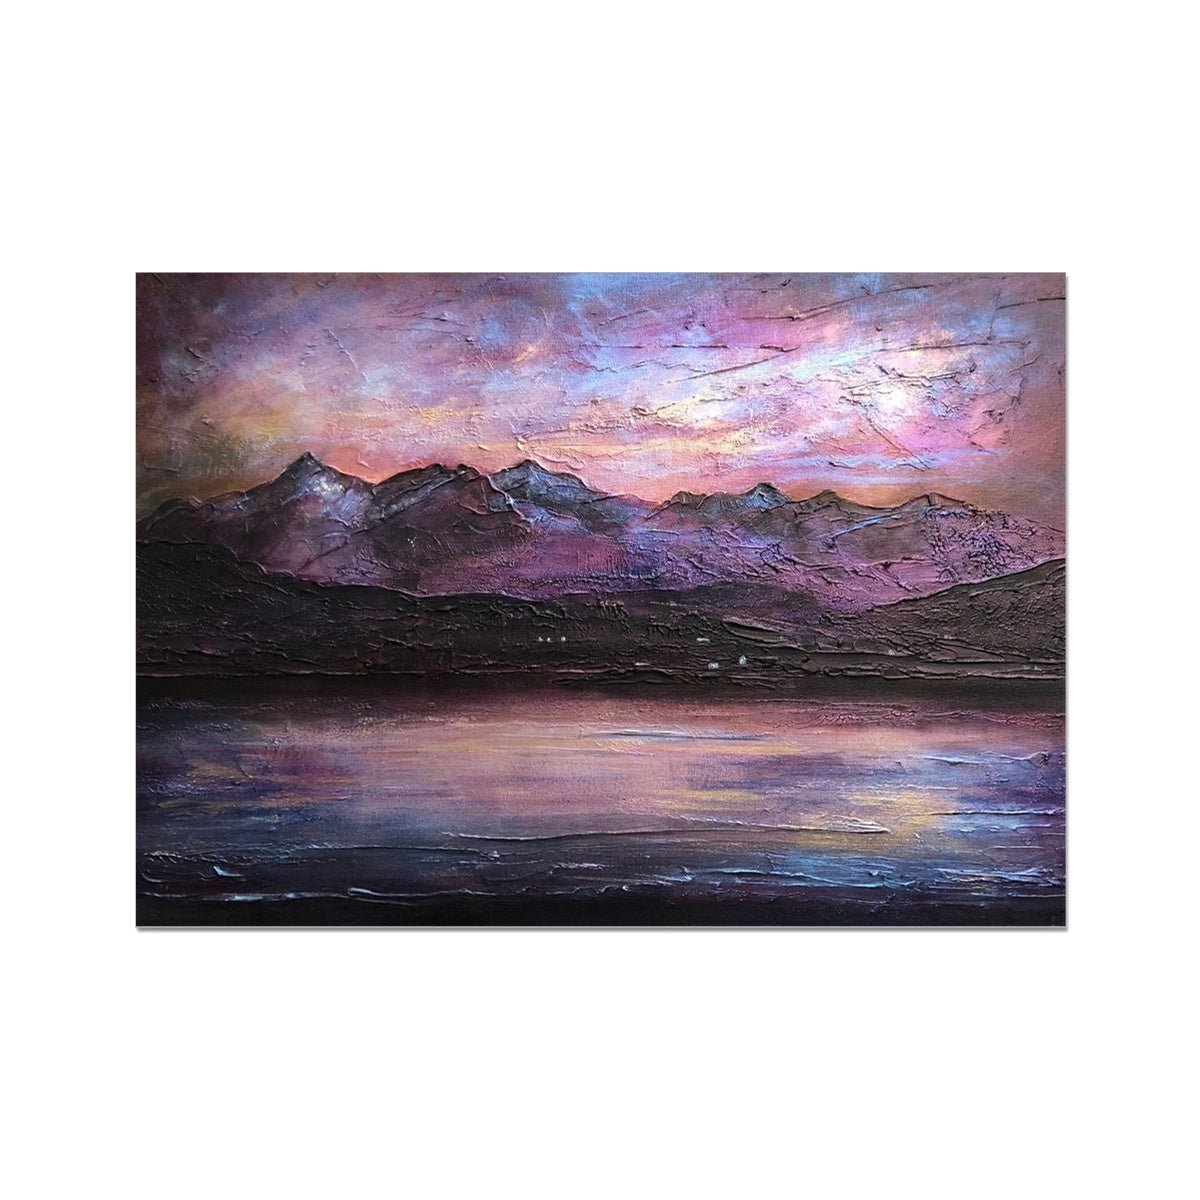 Last Skye Light Painting | Fine Art Prints From Scotland-Unframed Prints-Skye Art Gallery-A2 Landscape-Paintings, Prints, Homeware, Art Gifts From Scotland By Scottish Artist Kevin Hunter